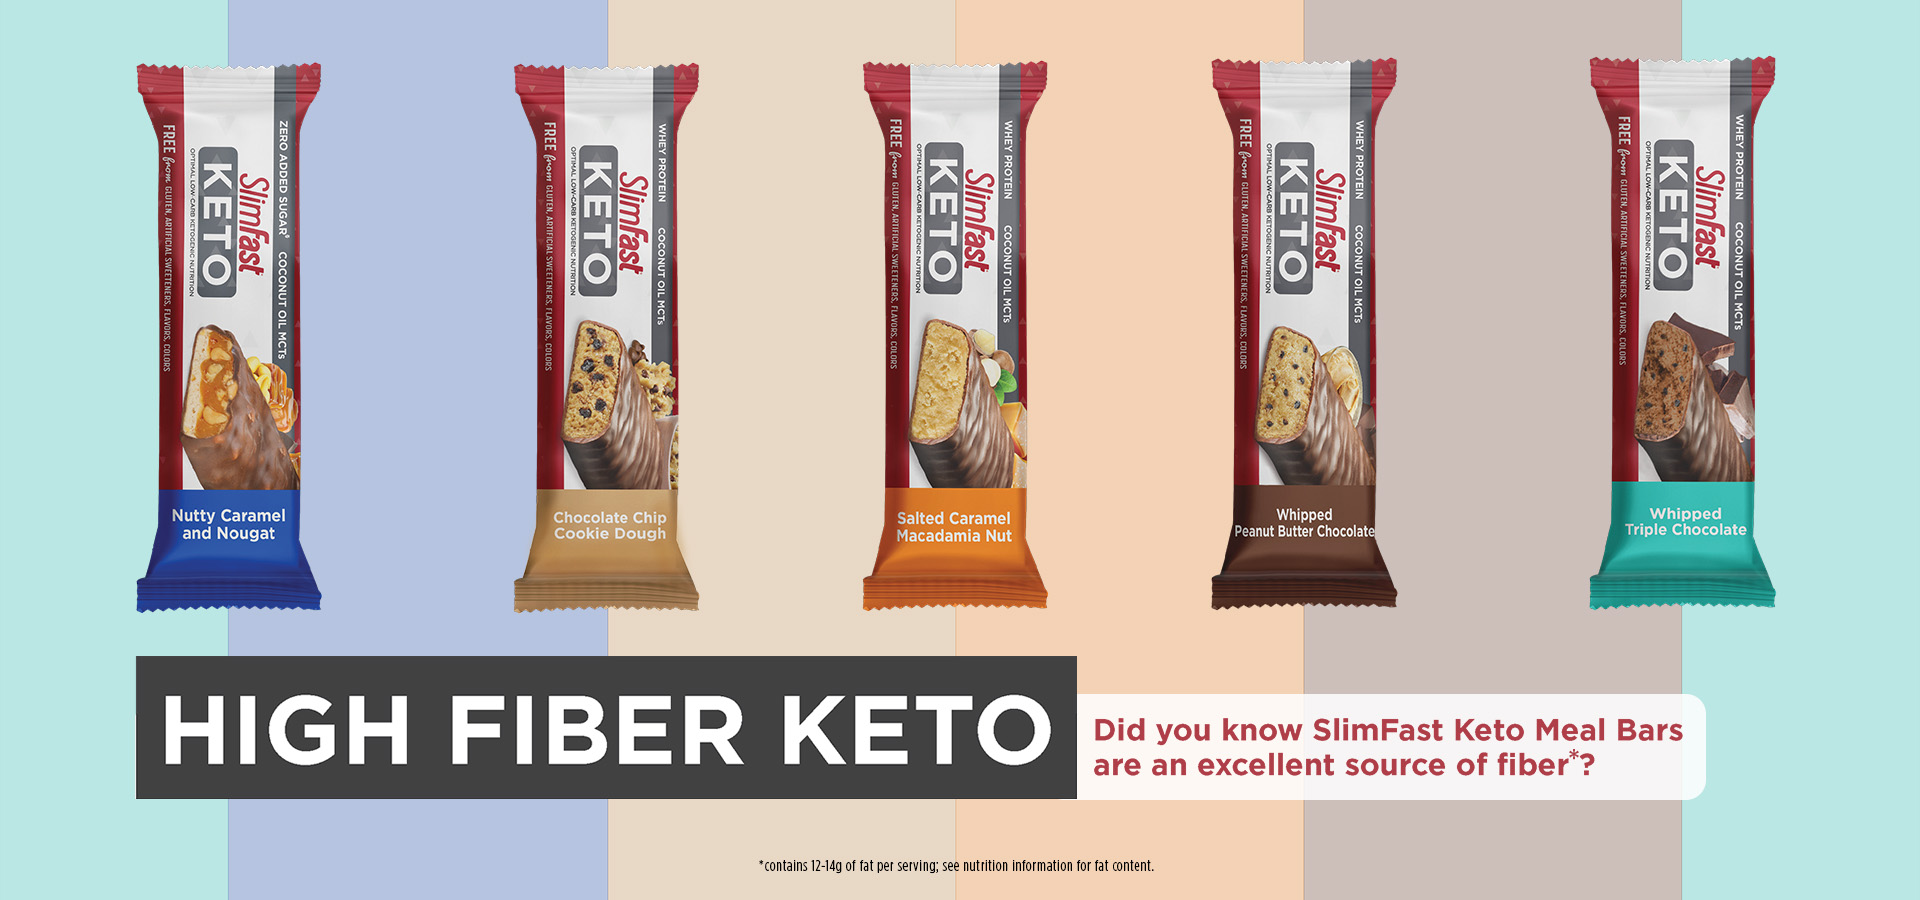 SlimFast Keto Meal Bars are High in Fiber